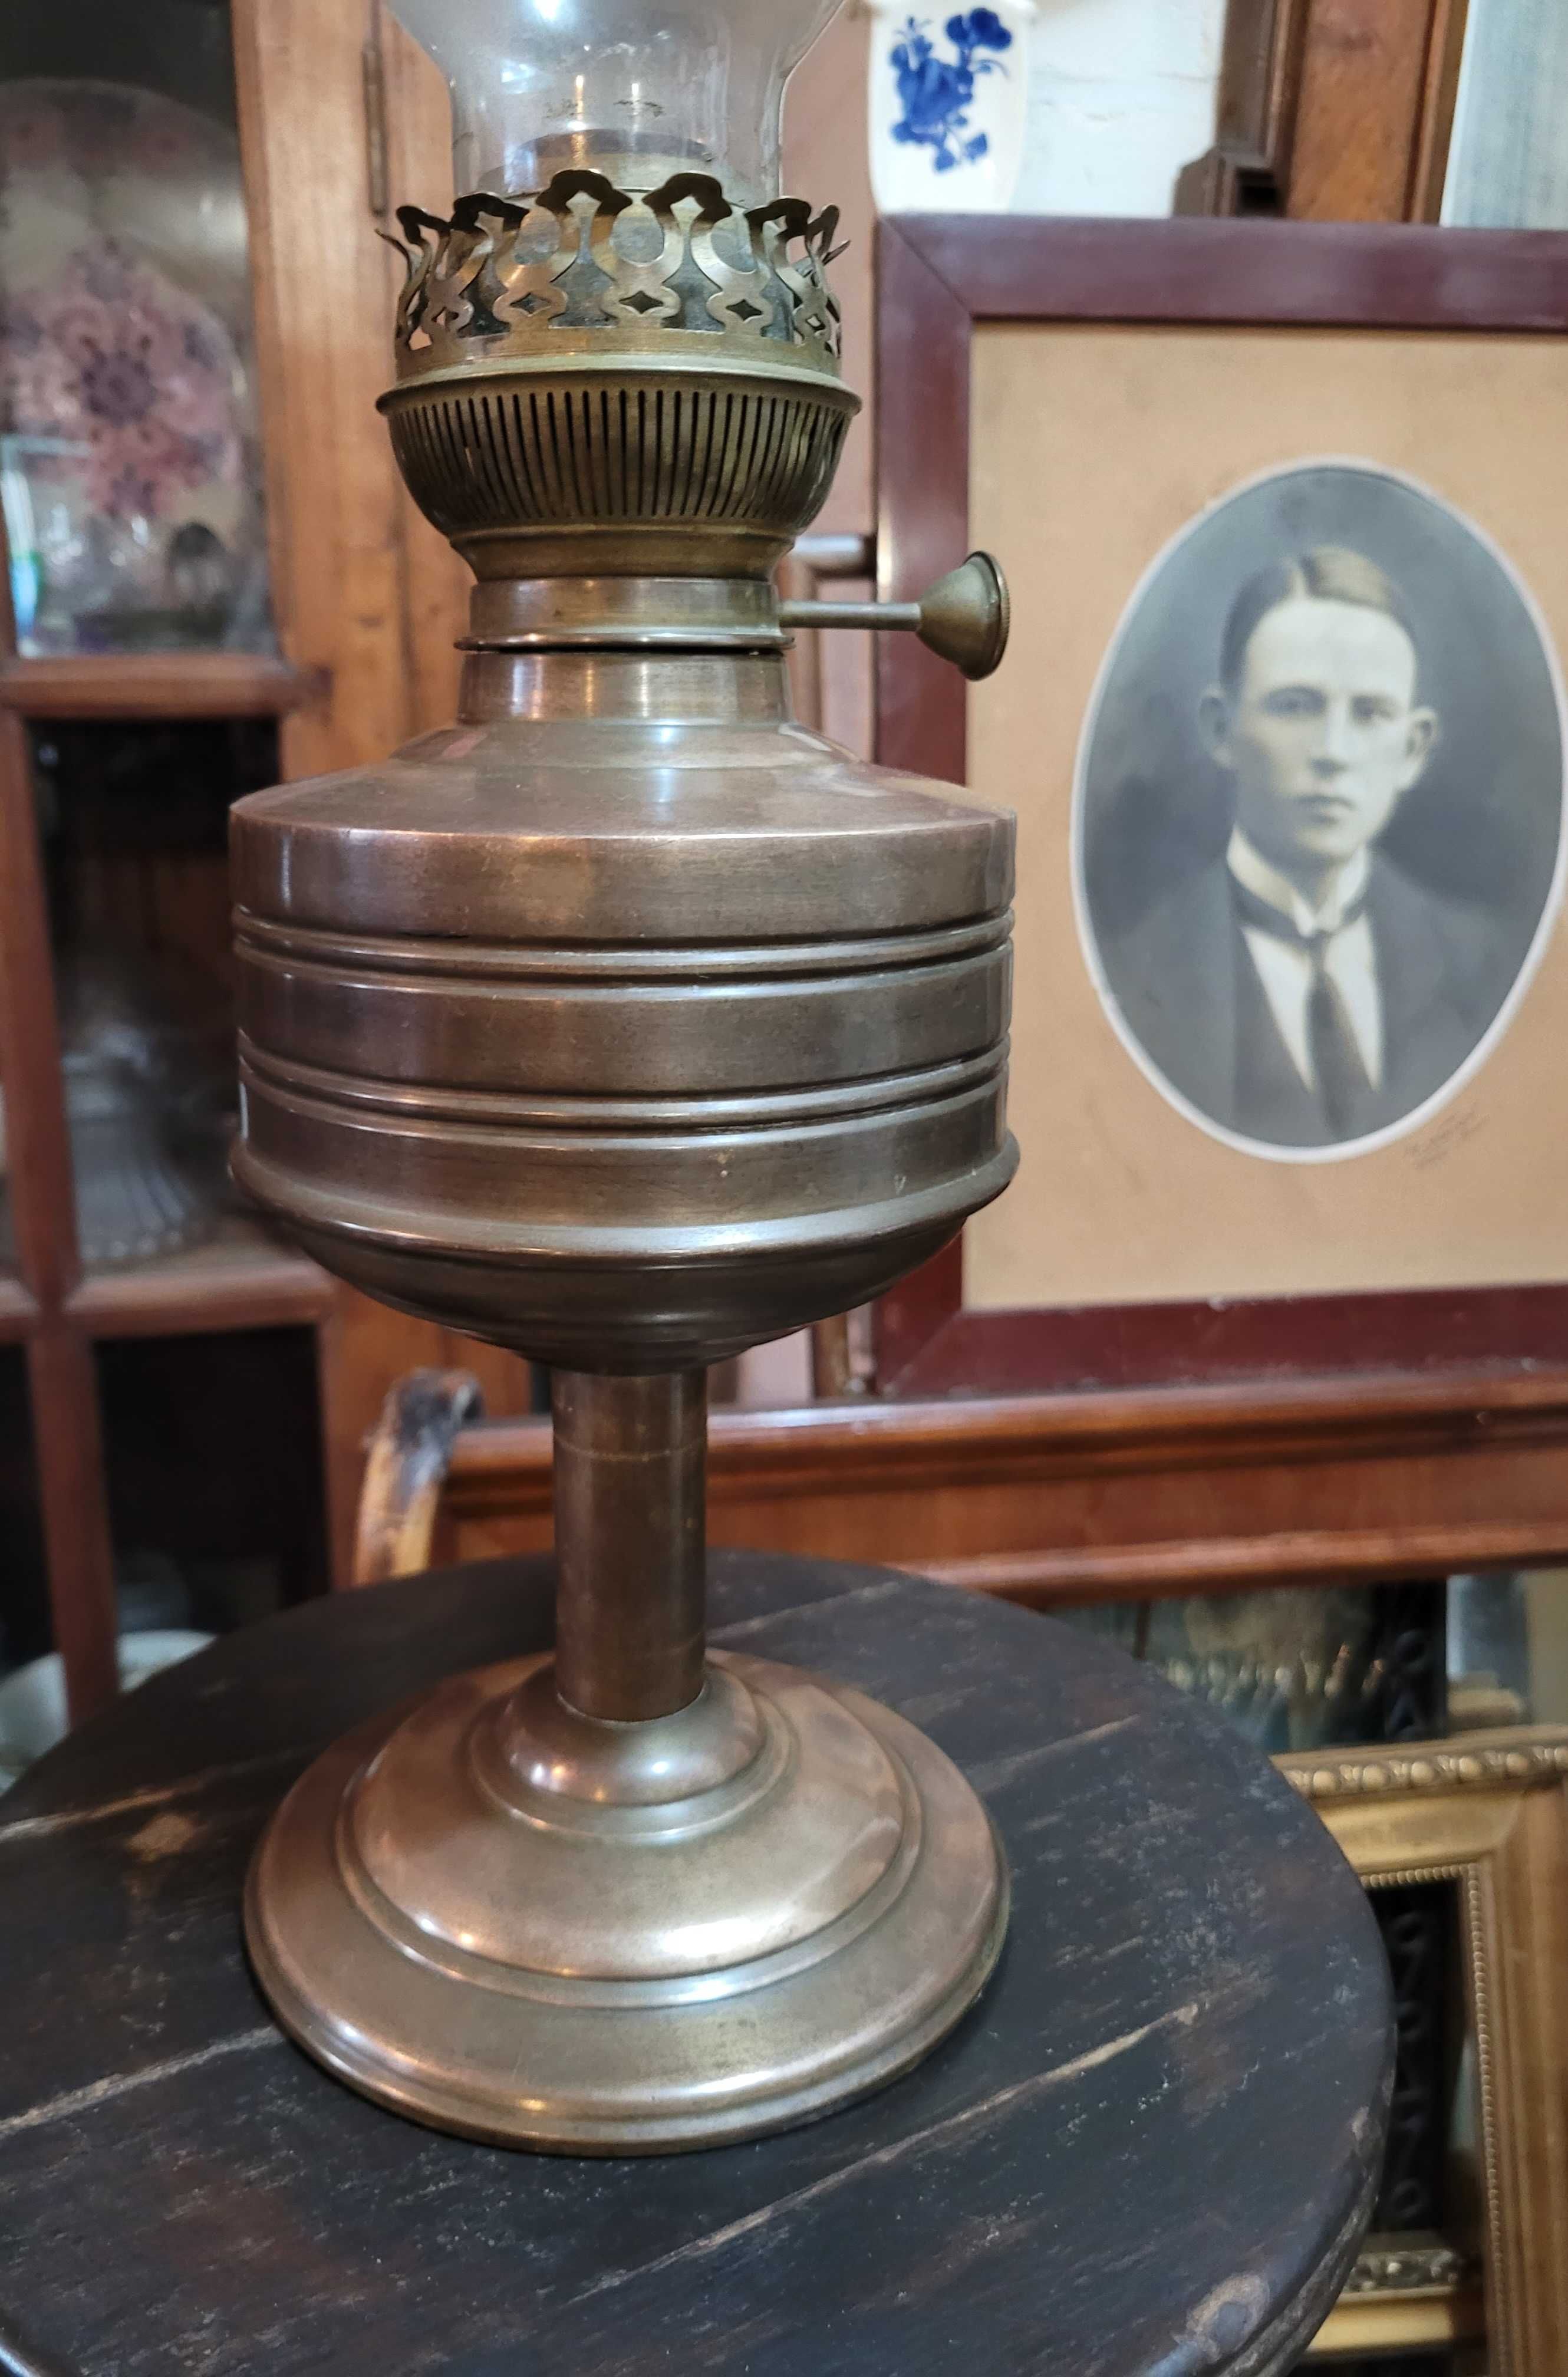 Stara przedwojenna lampa naftowa